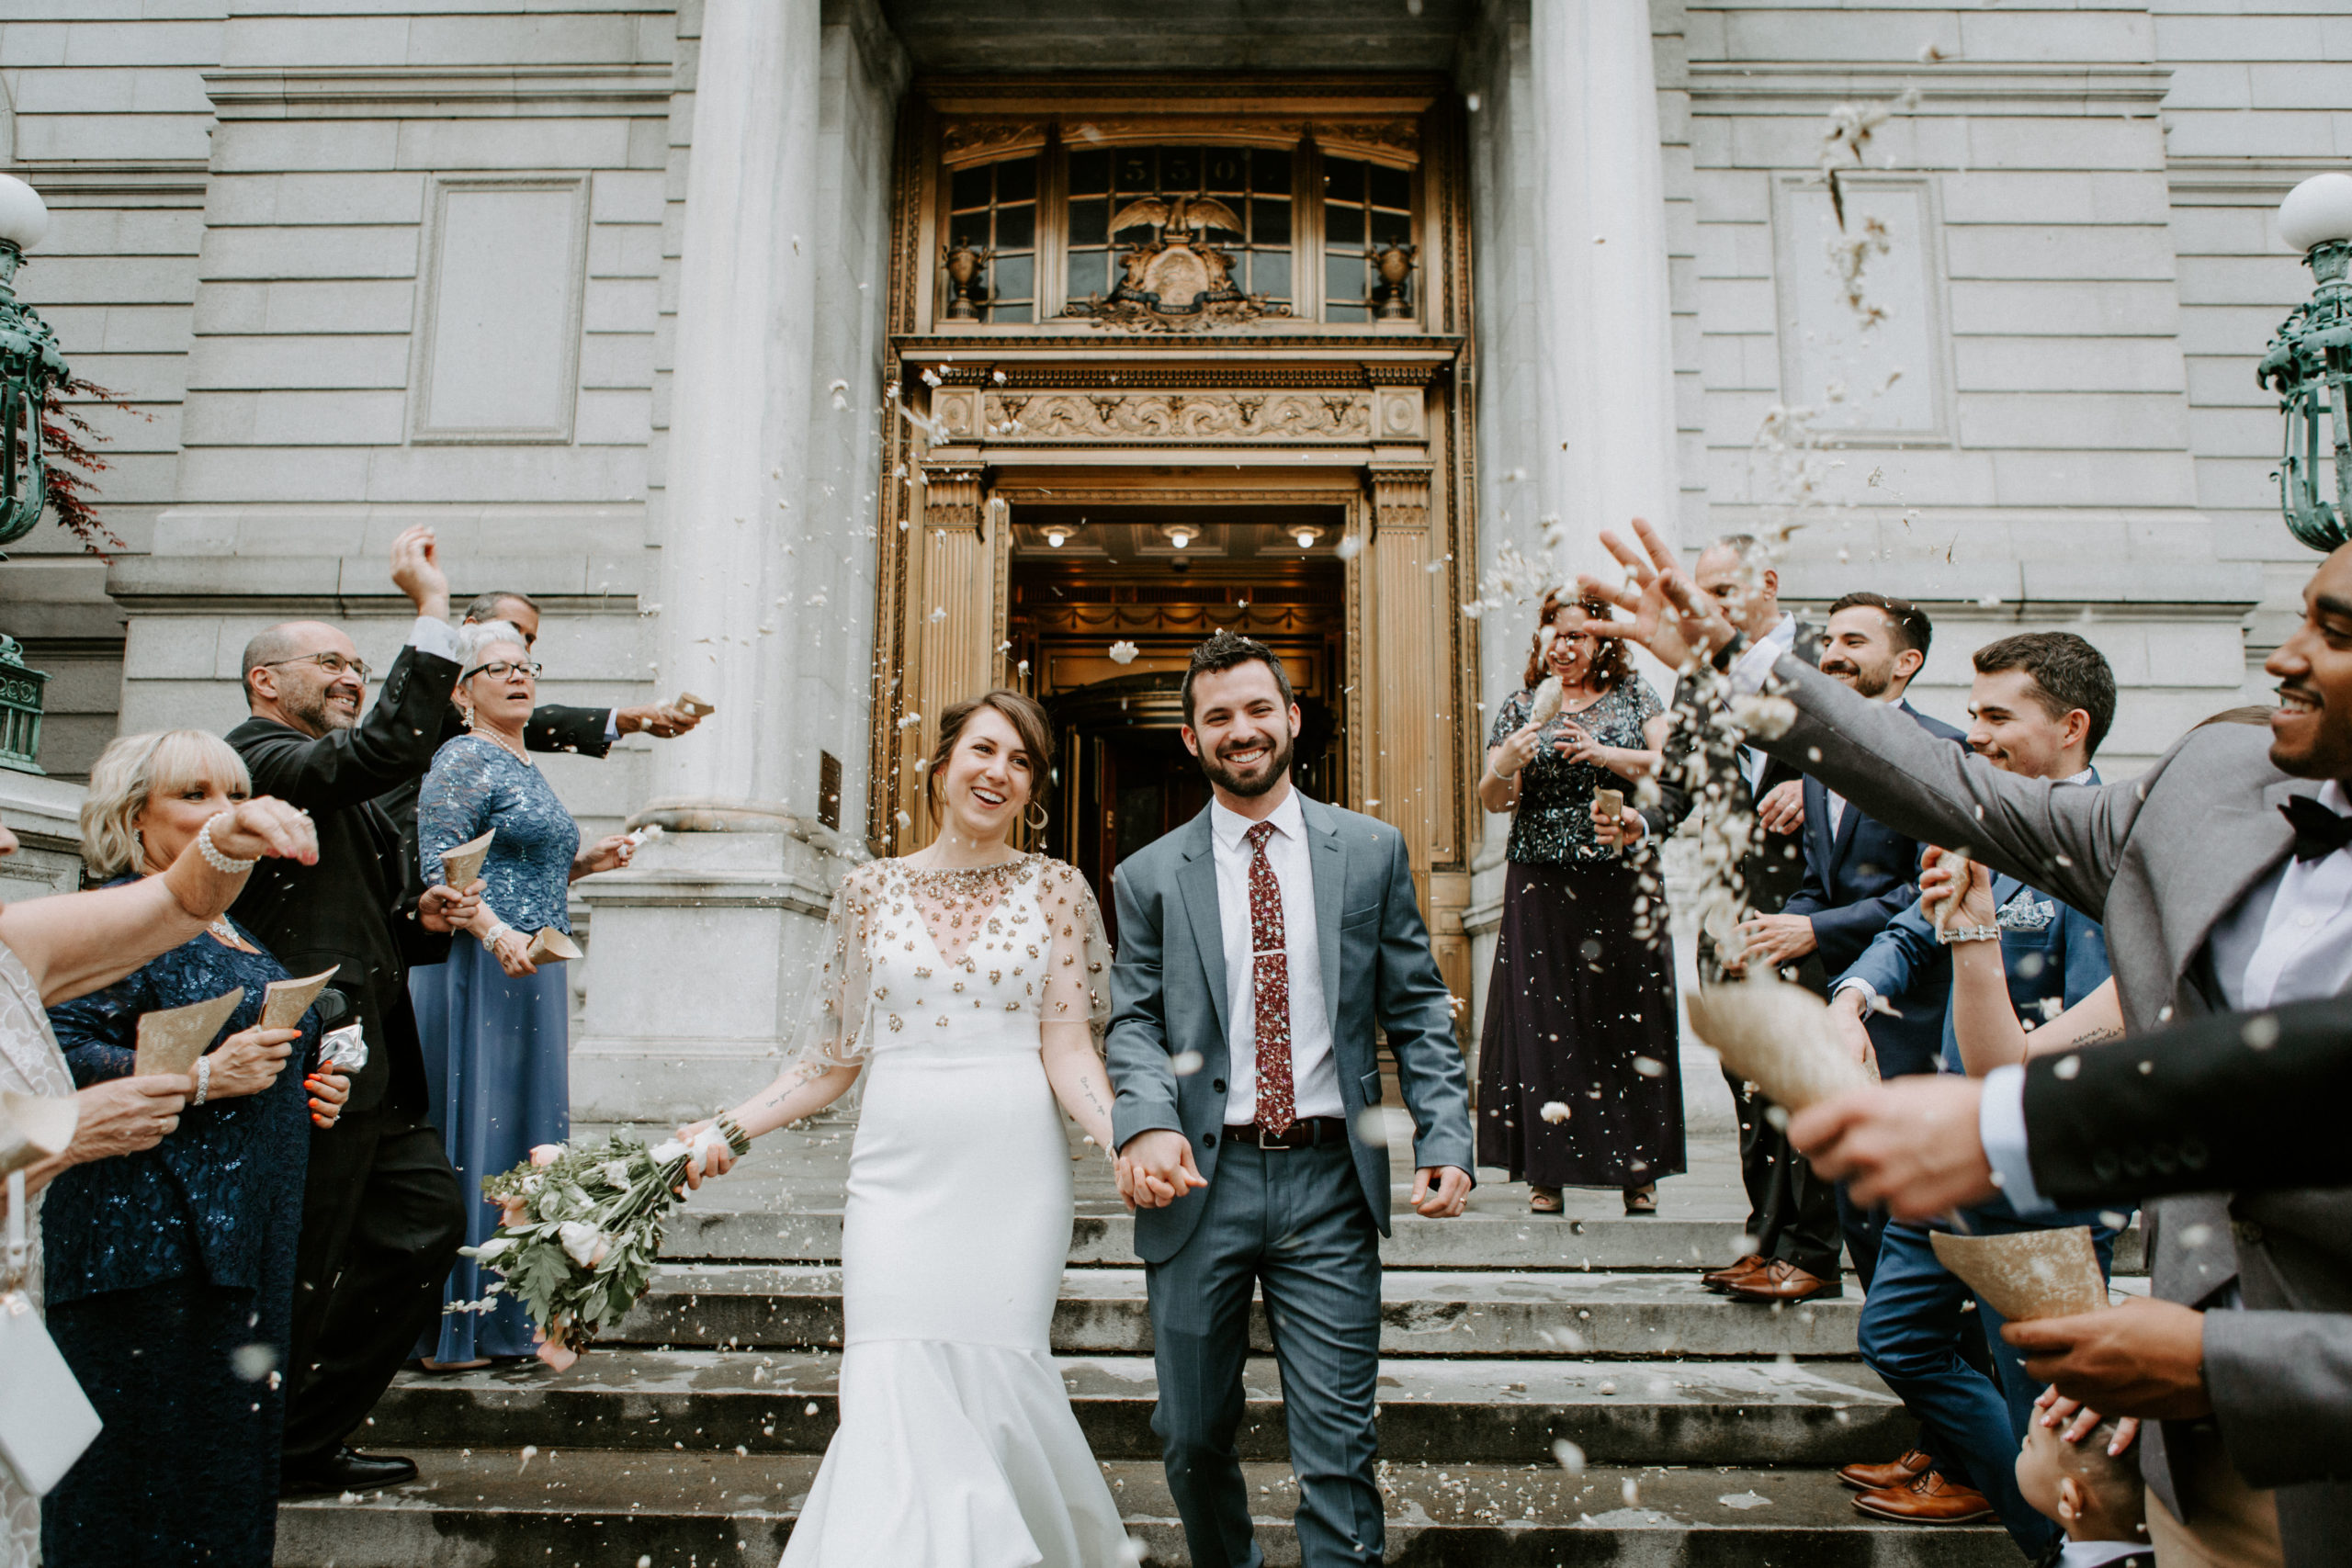 city hall wedding dress 2019